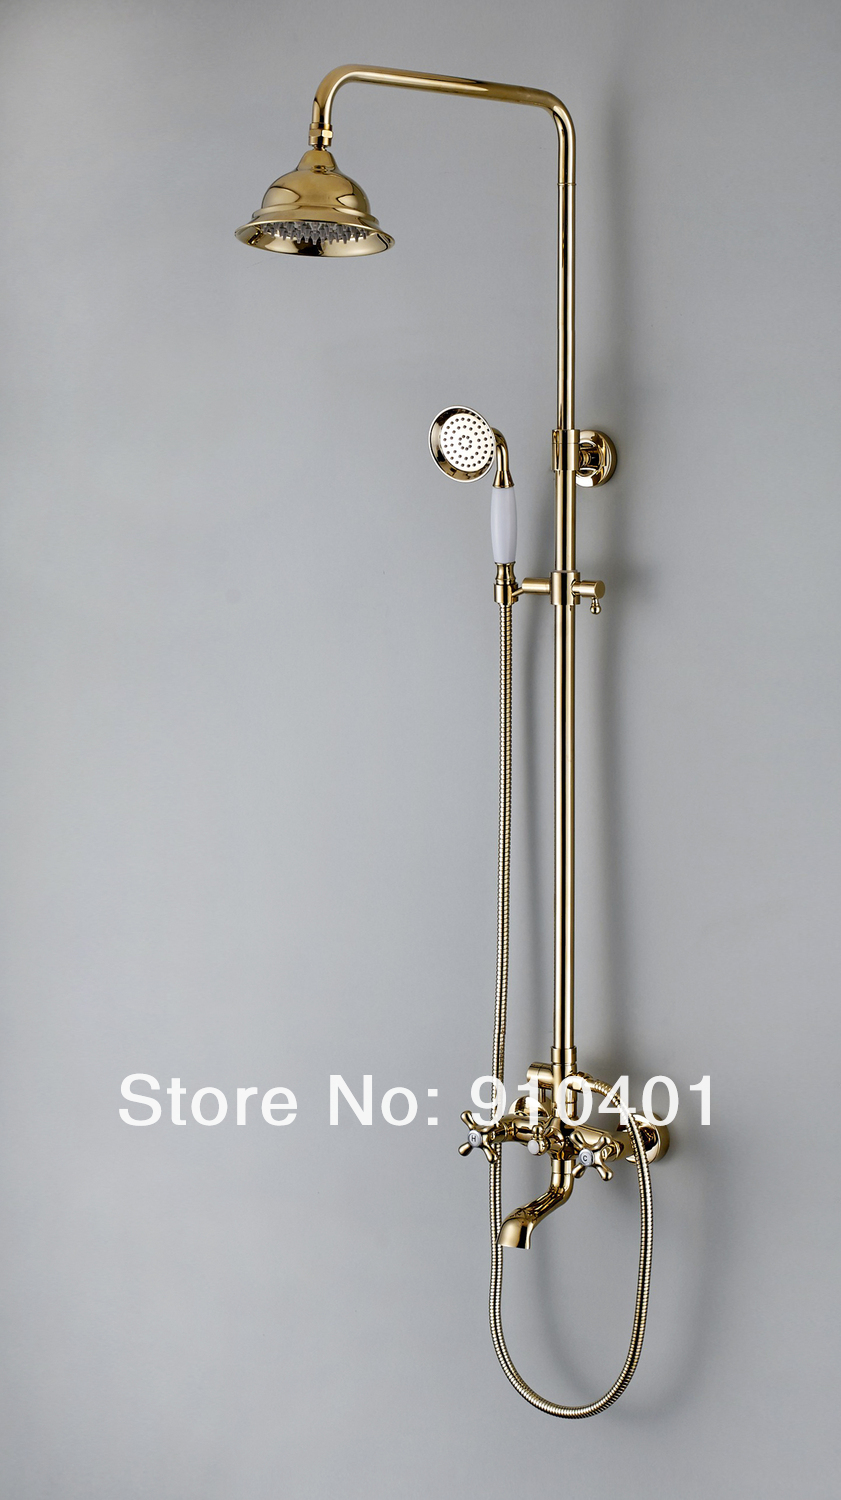 NEW Wholesale /Retail Promotion NEW Golden Bathroom Tub Shower Faucet Set Cross Handles Shower Column Mixer Tap